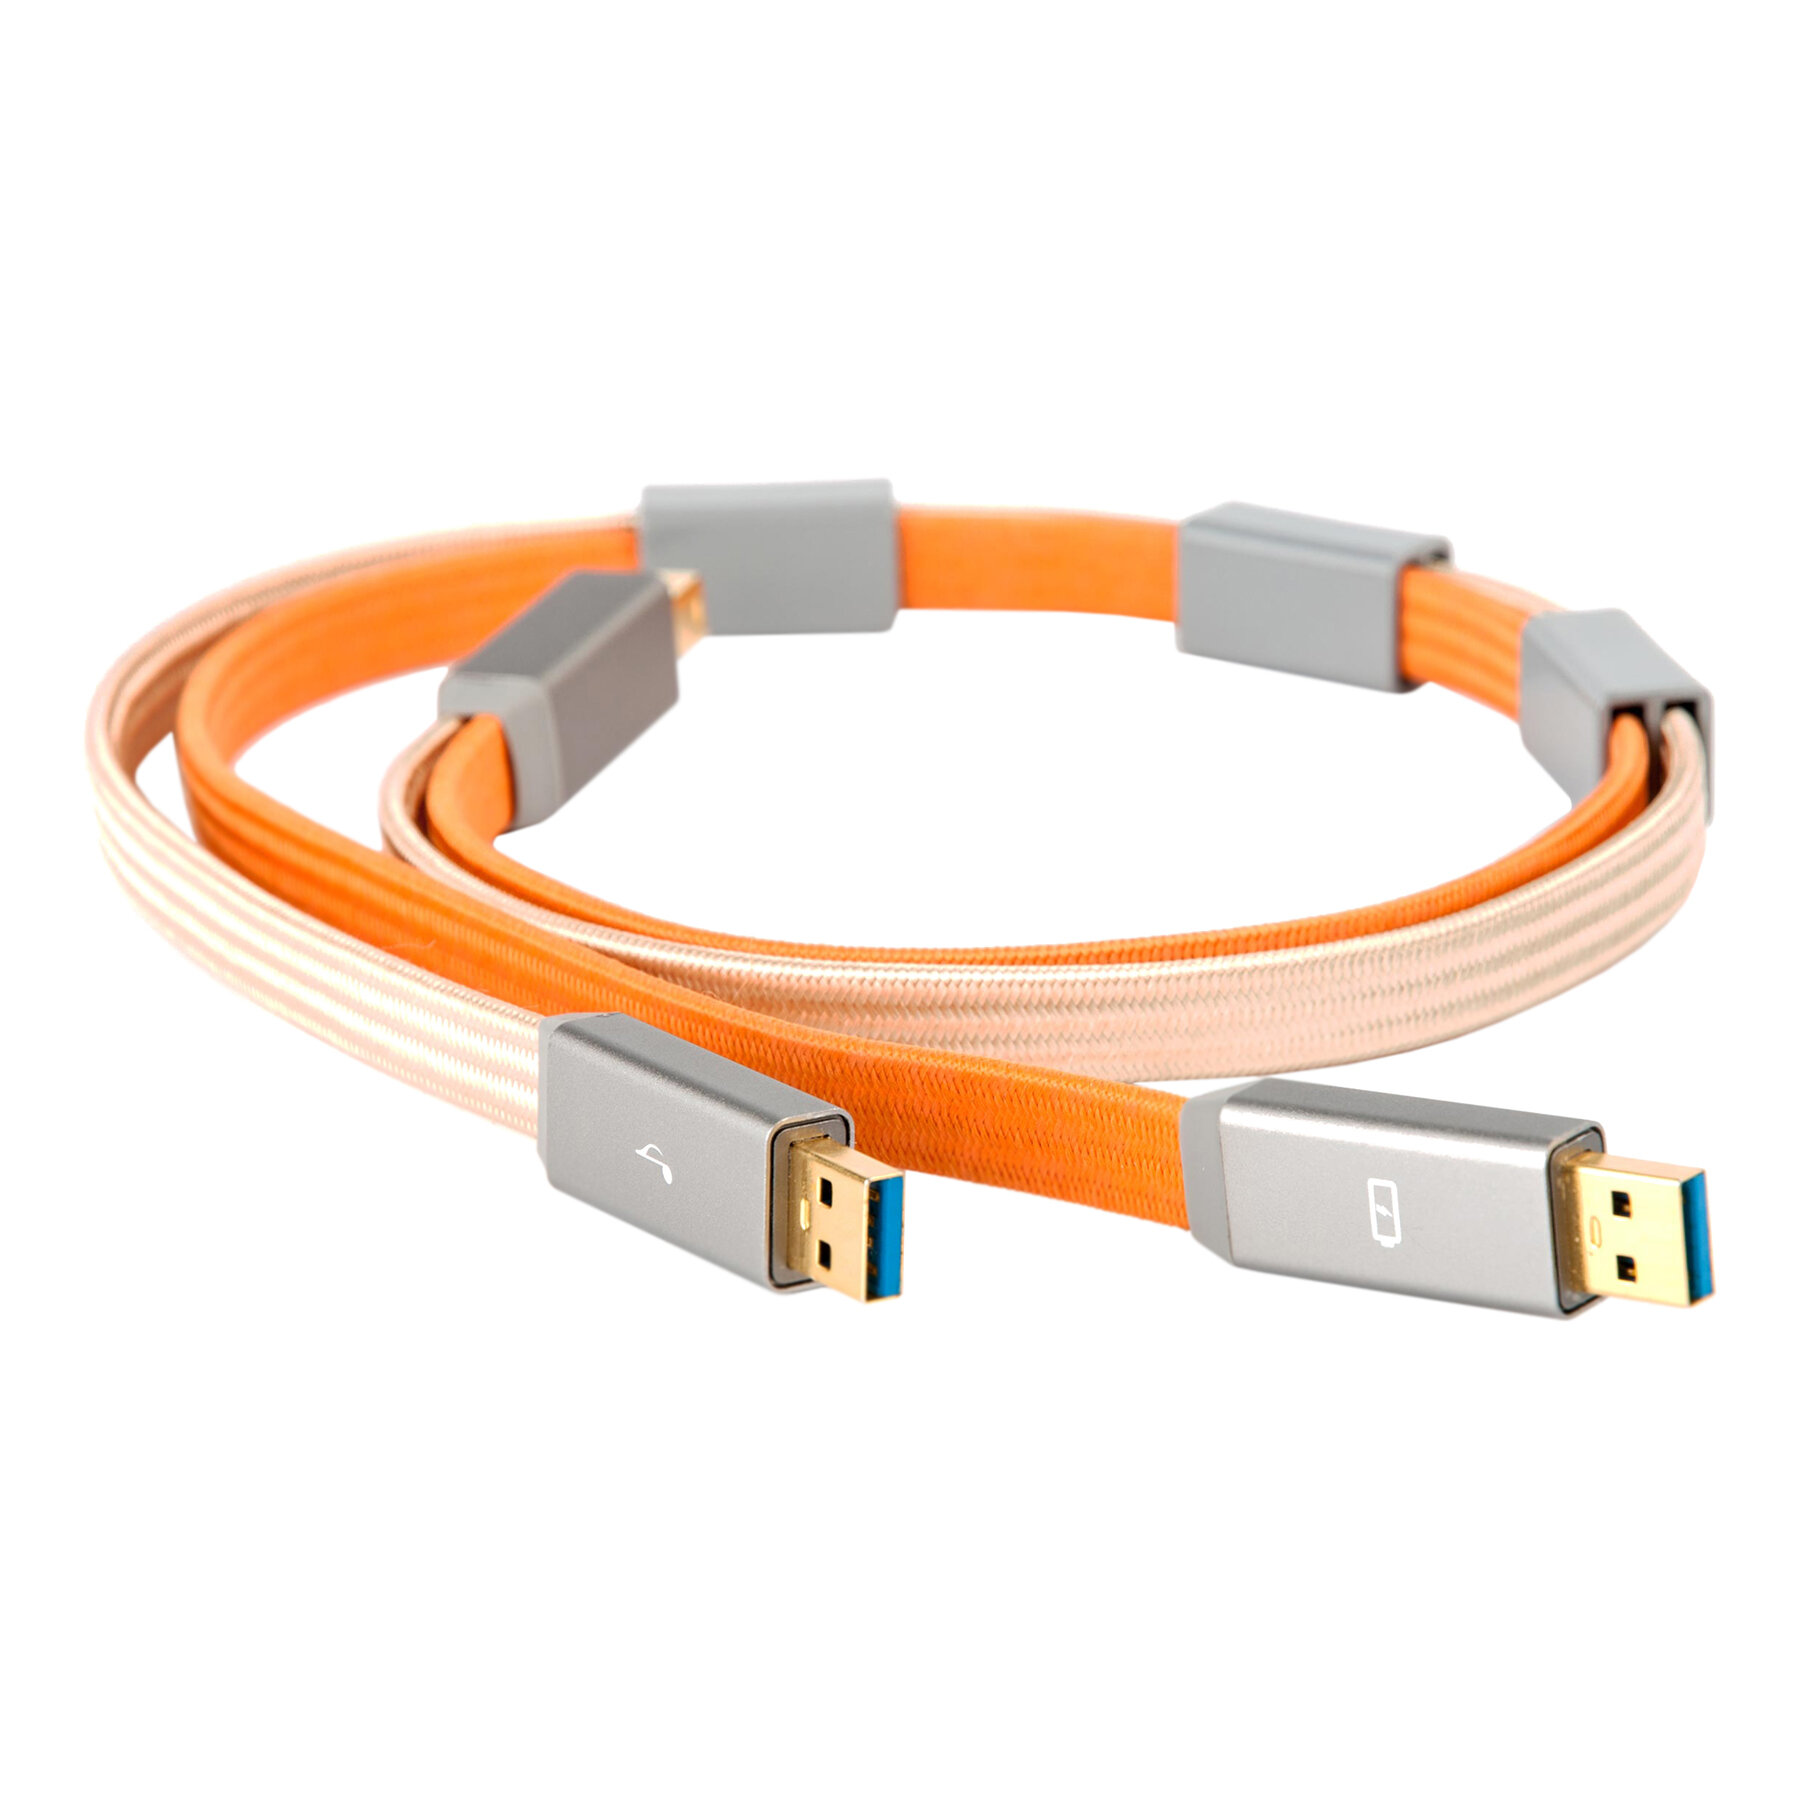 iFi Gemini cable 3.0 (USB 3.0 B connector) 1.5m